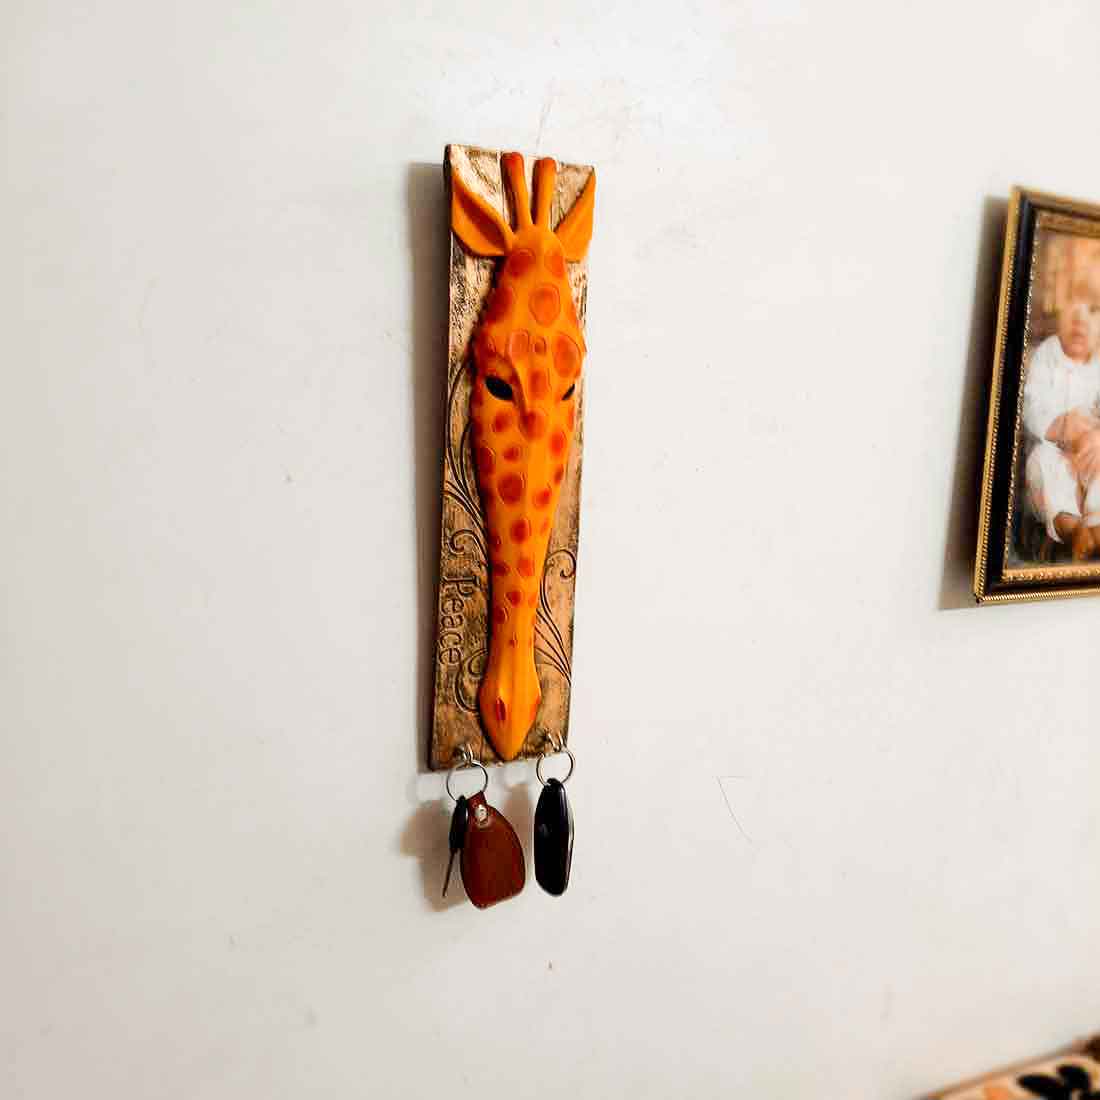 Wall Hanging Key Hook - Giraffe Design - For Wall & Home Decor - 16 Inches - ApkaMart